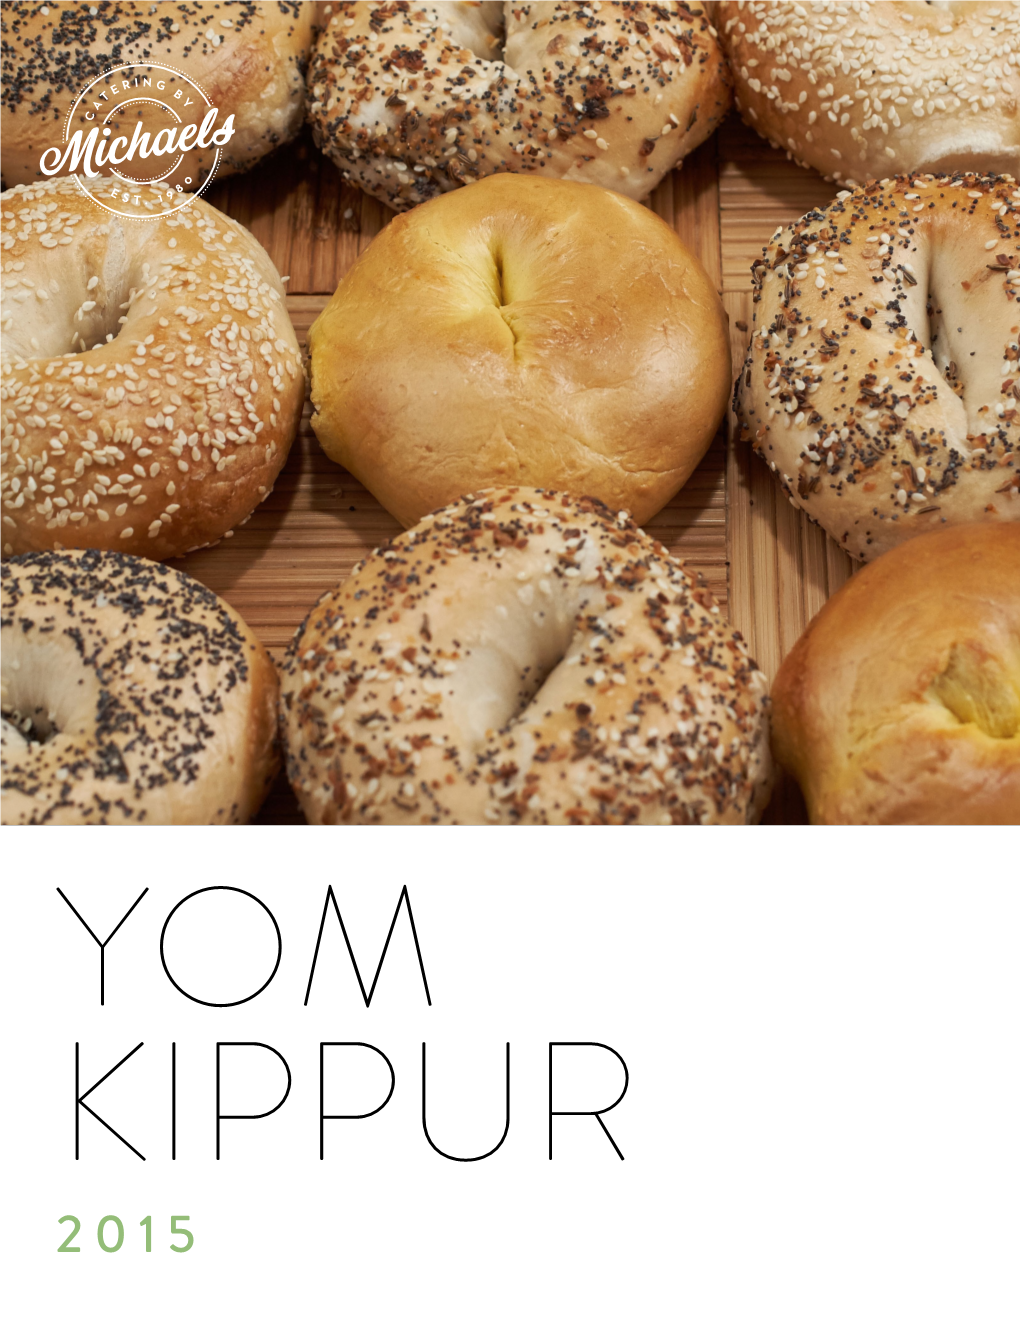 YOM KIPPUR 2015 YOM KIPPUR 2015 * New Item V Vegetarian N Contains Nuts GF Gluten Free